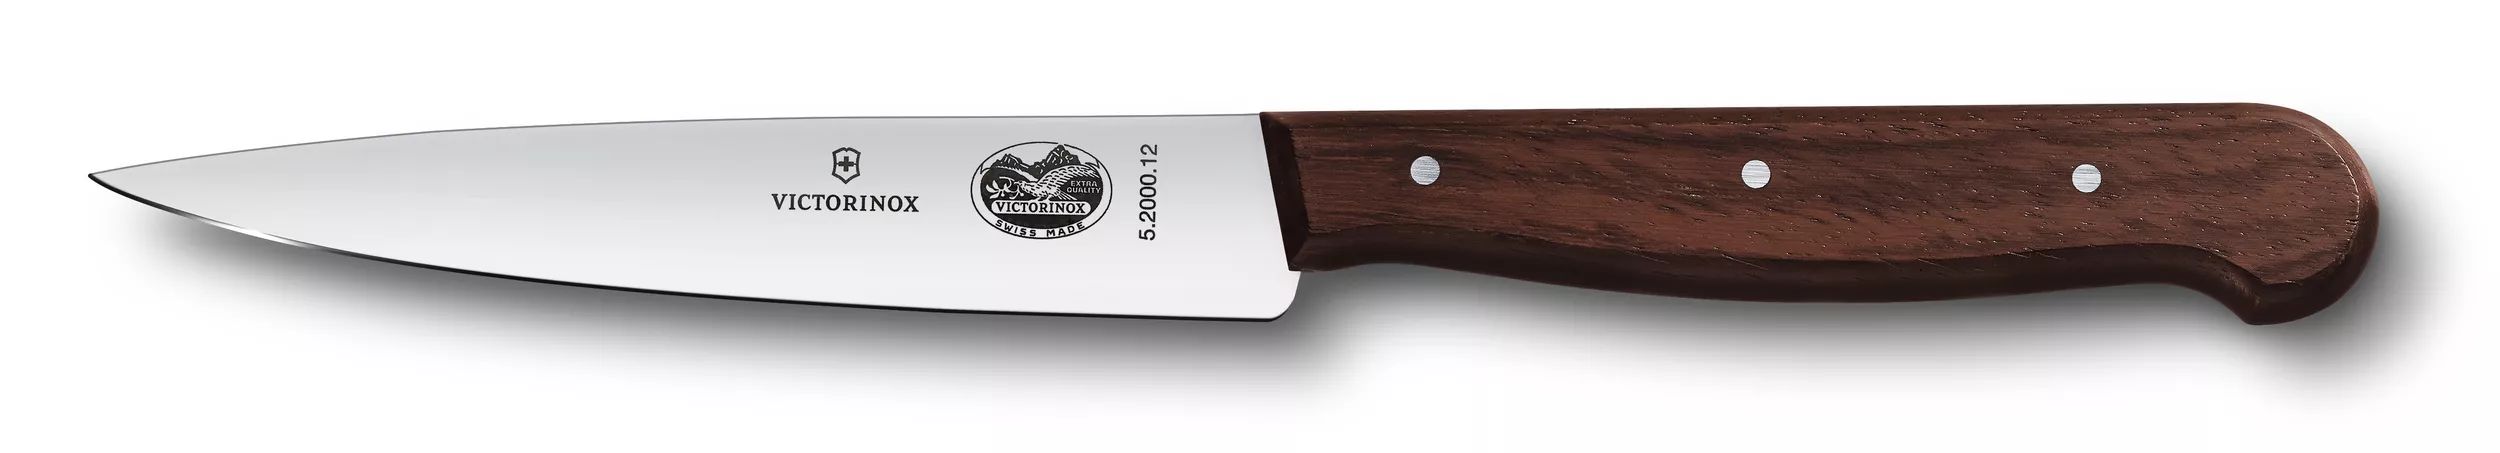 Mały nóż kuchenny Wood-5.2000.12